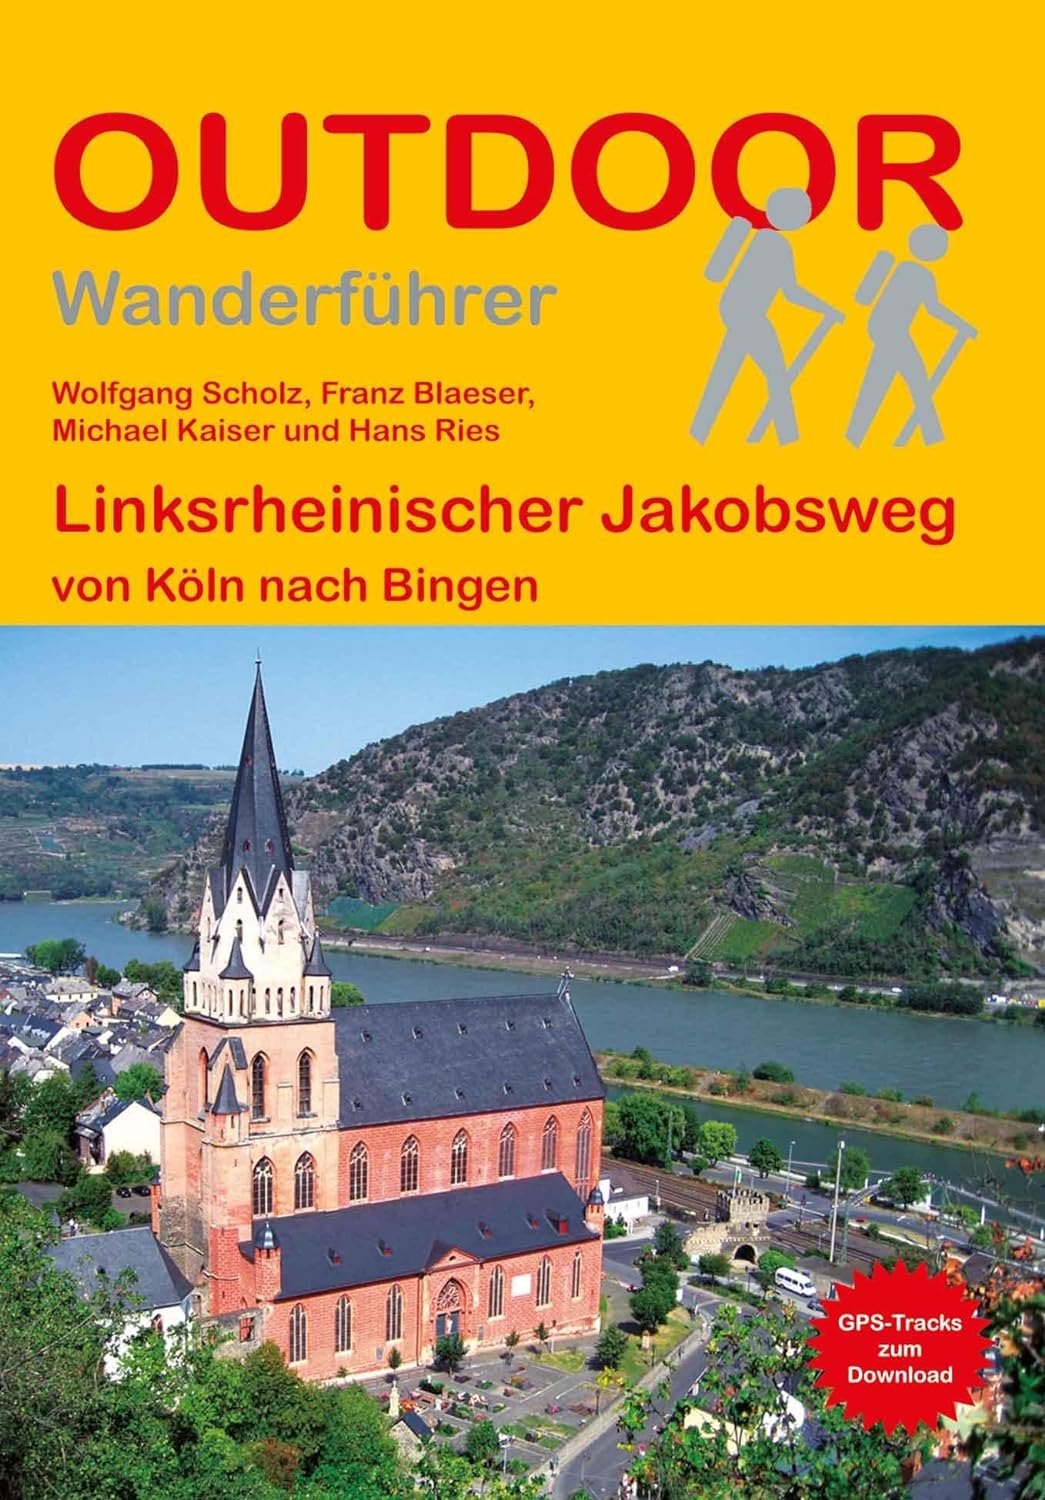 Online bestellen: Wandelgids - Pelgrimsroute Linksrheinischer Jakobsweg | Conrad Stein Verlag